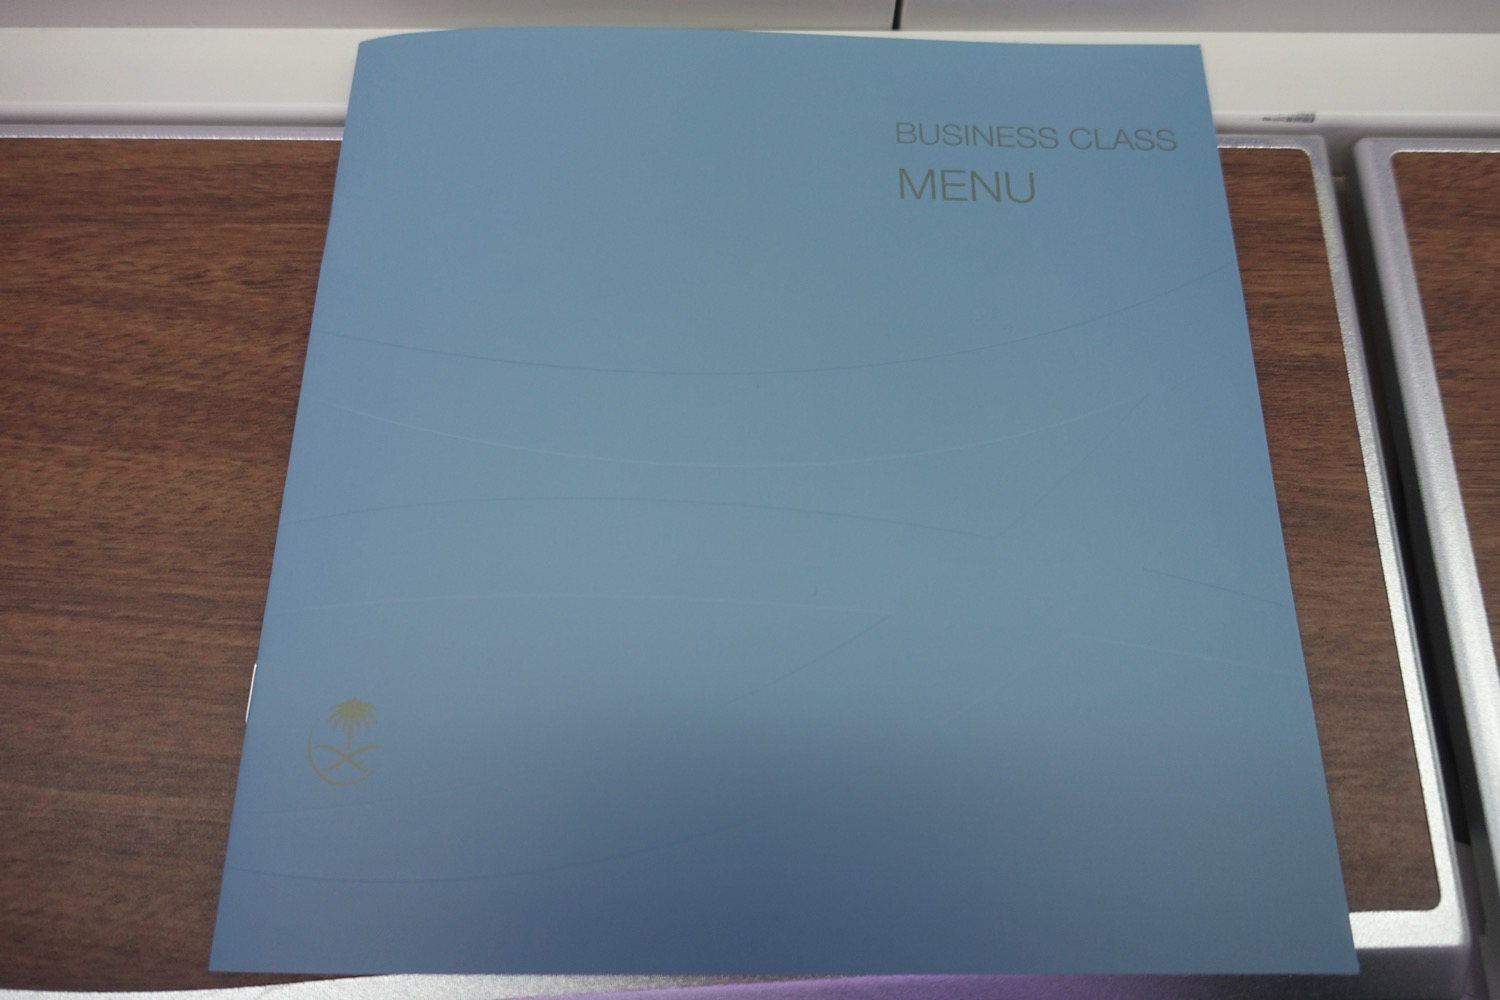 a blue menu on a wood surface